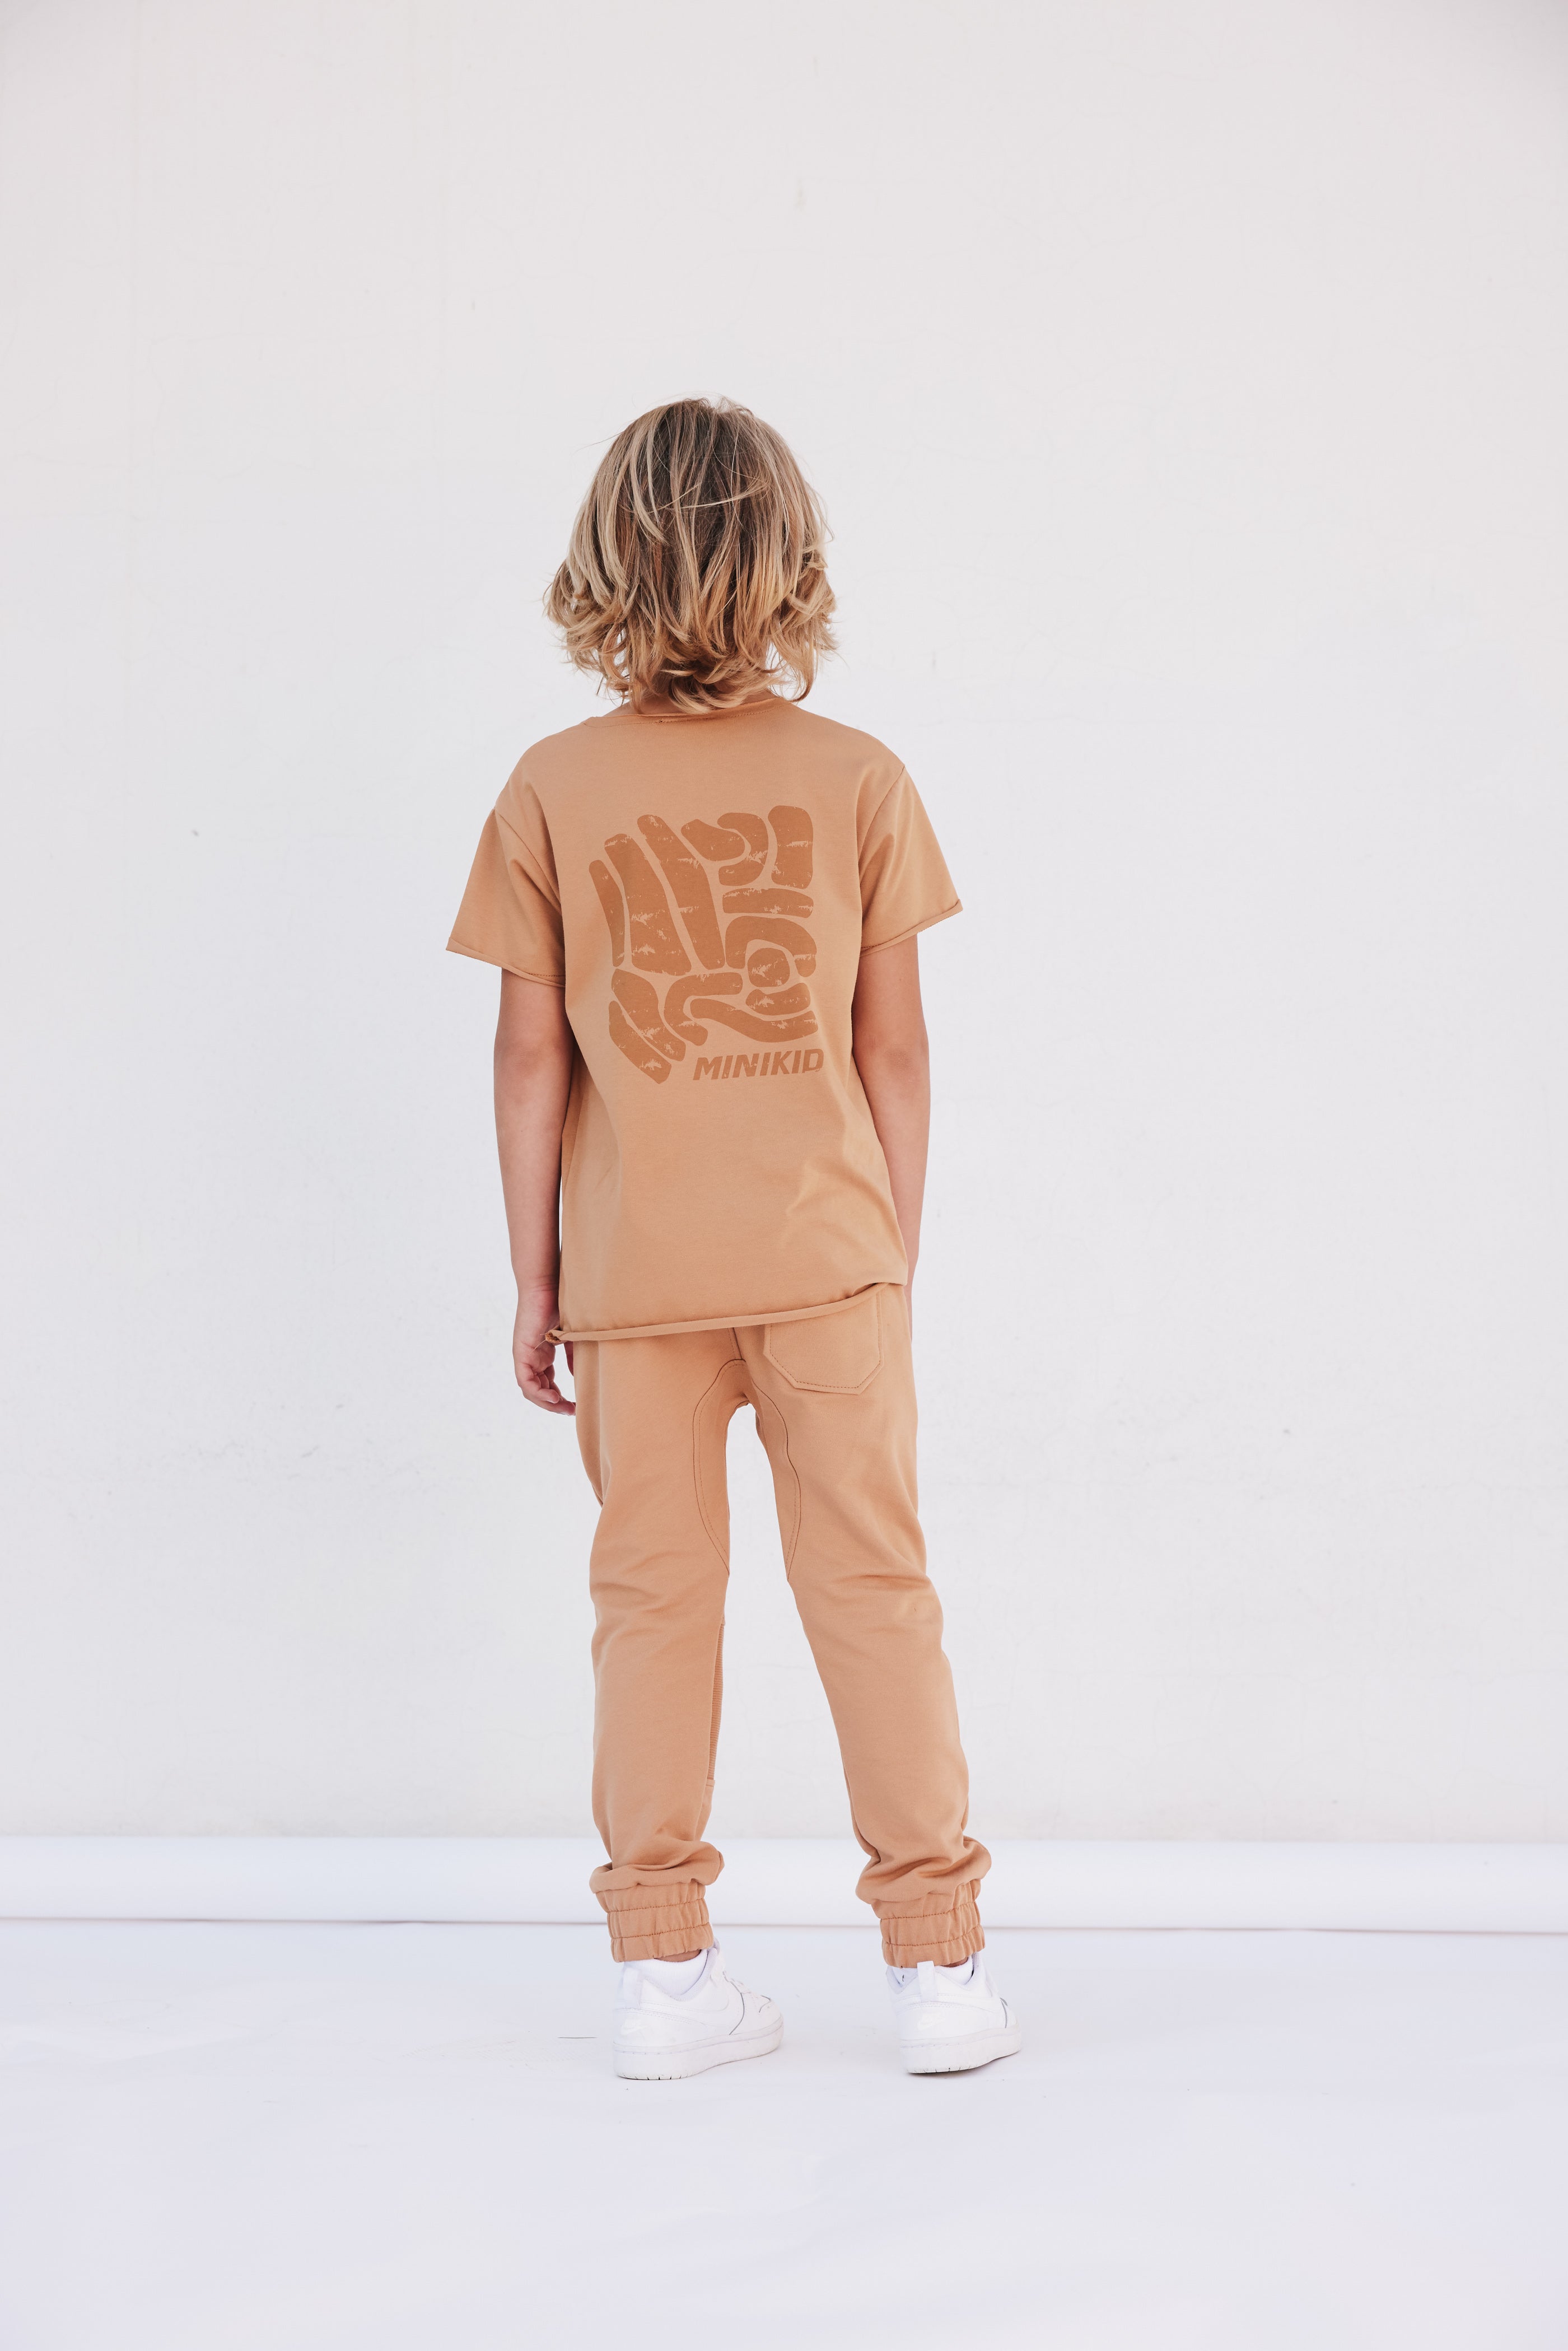 Minikid - Imprint Camel T-shirt